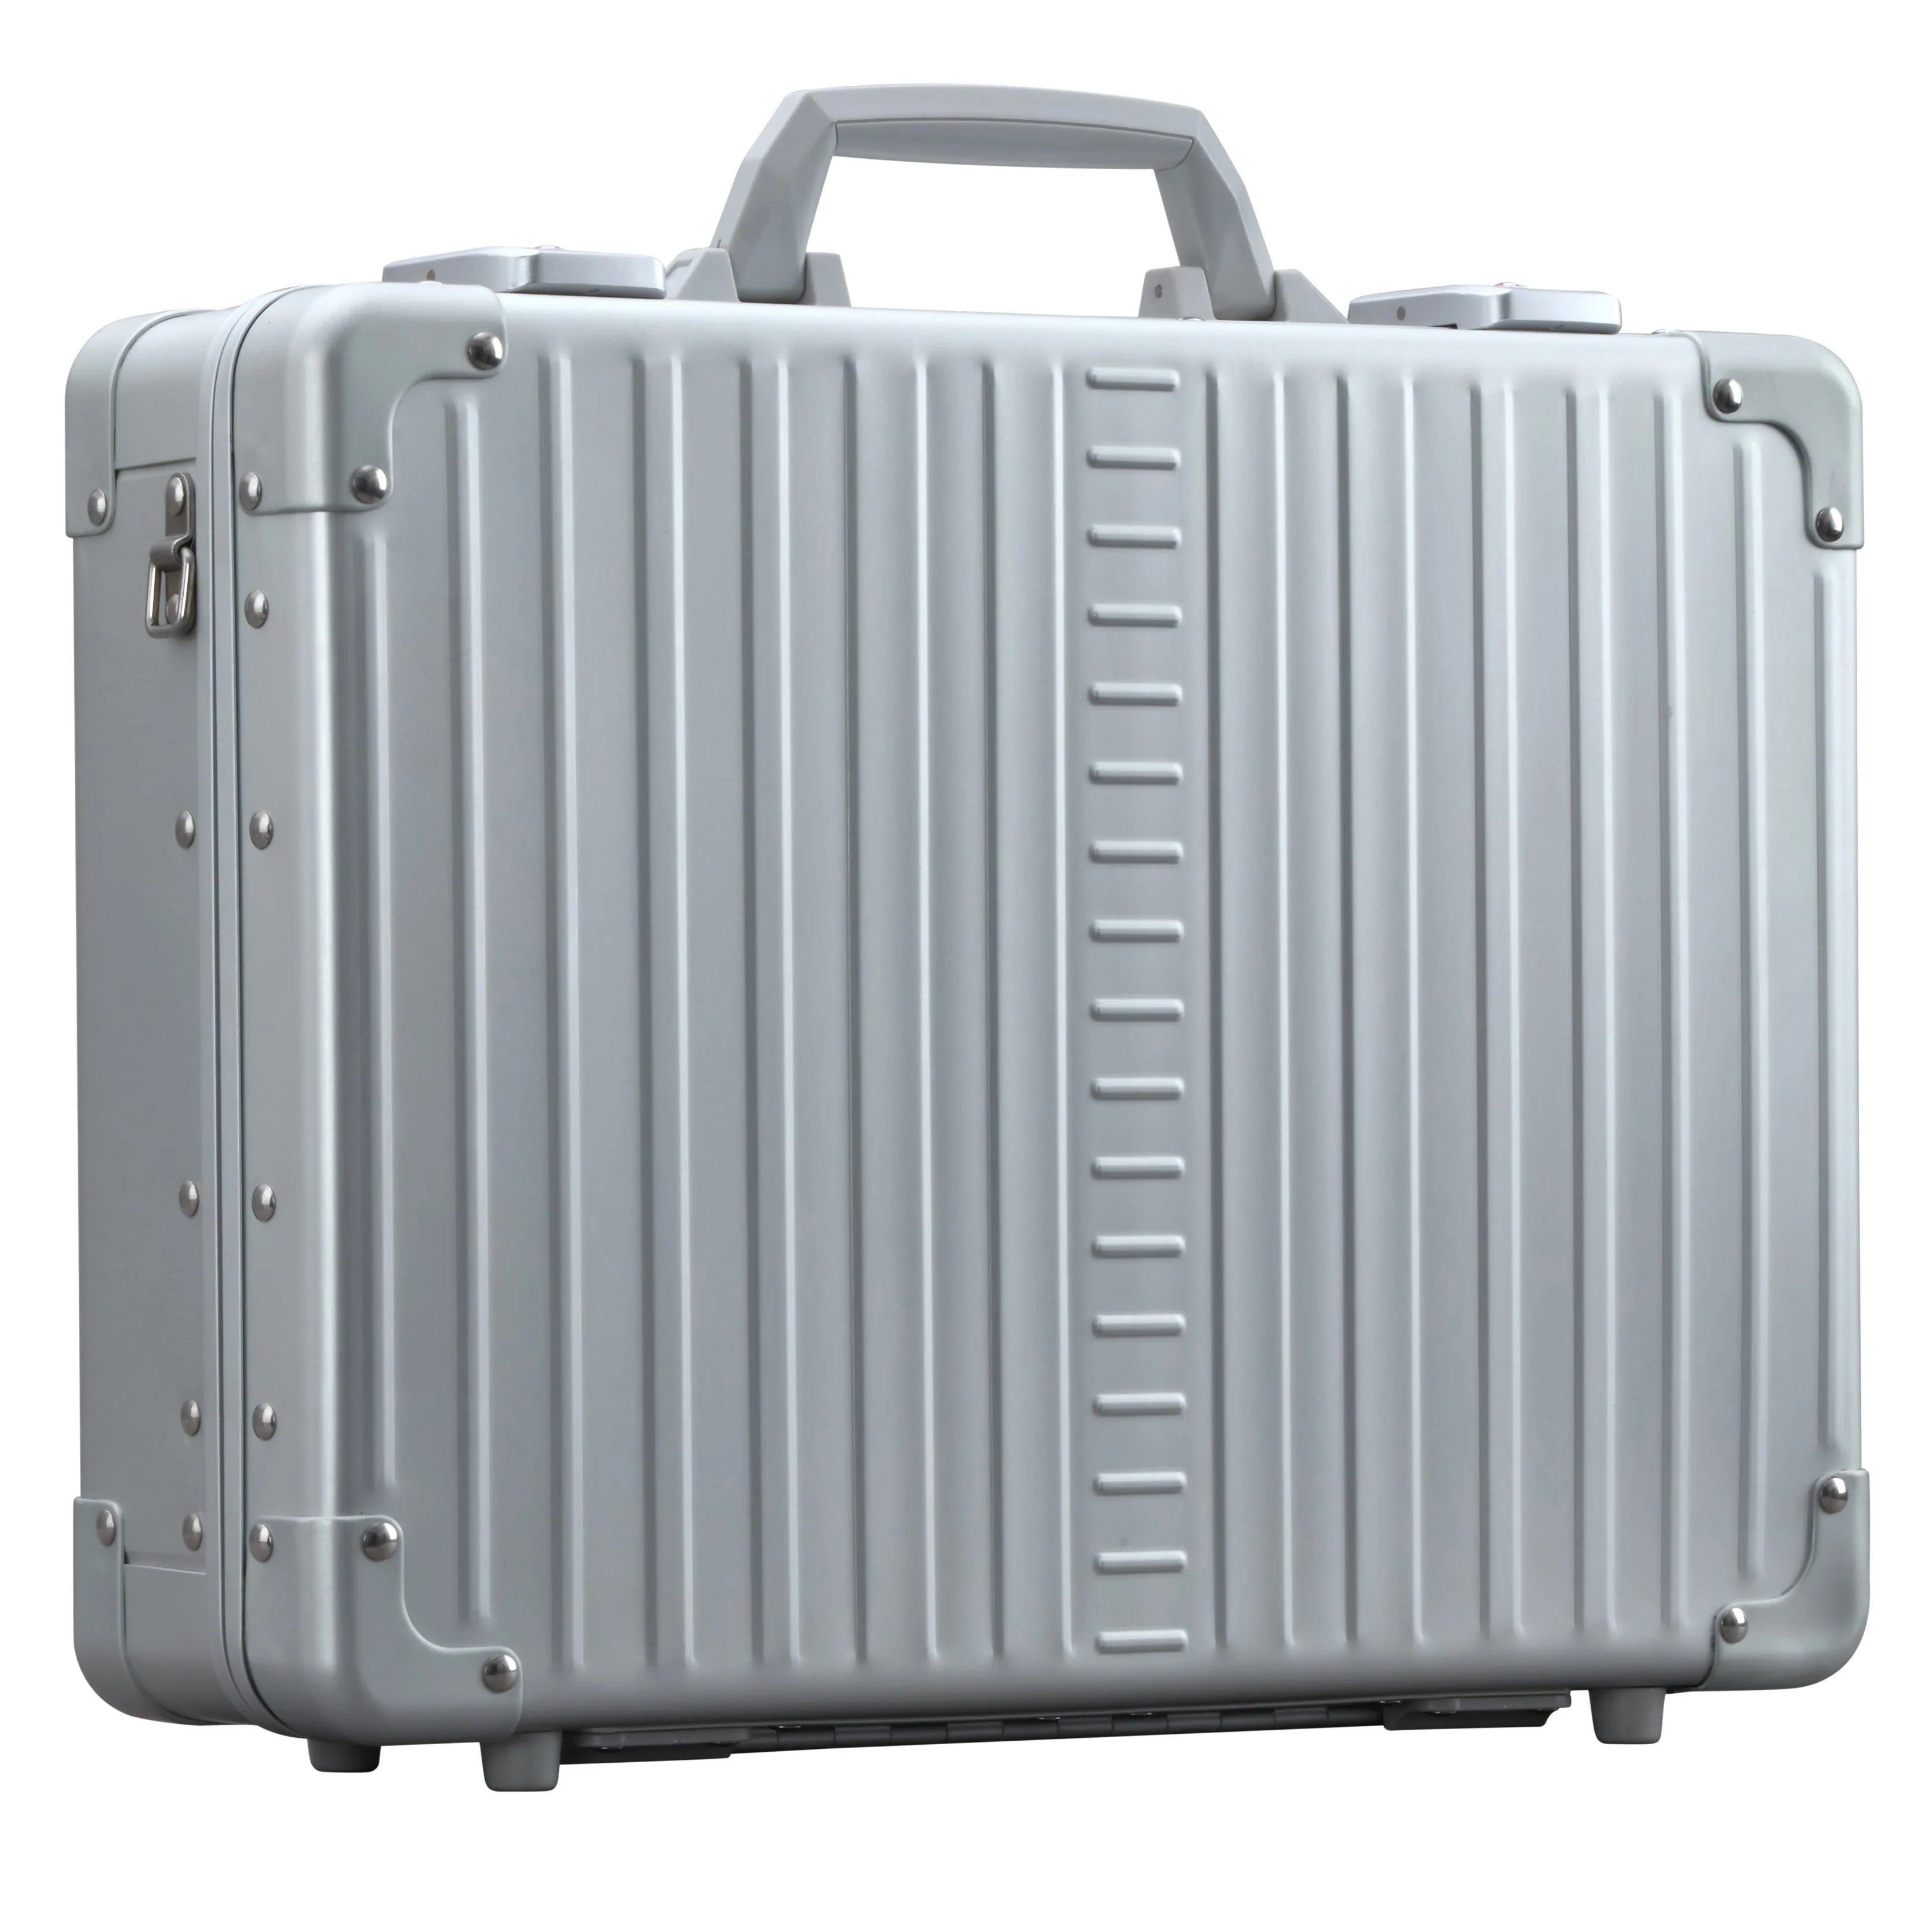 Aleon business suitcase 17 inch with laptop compartment 42 cm - Platinum